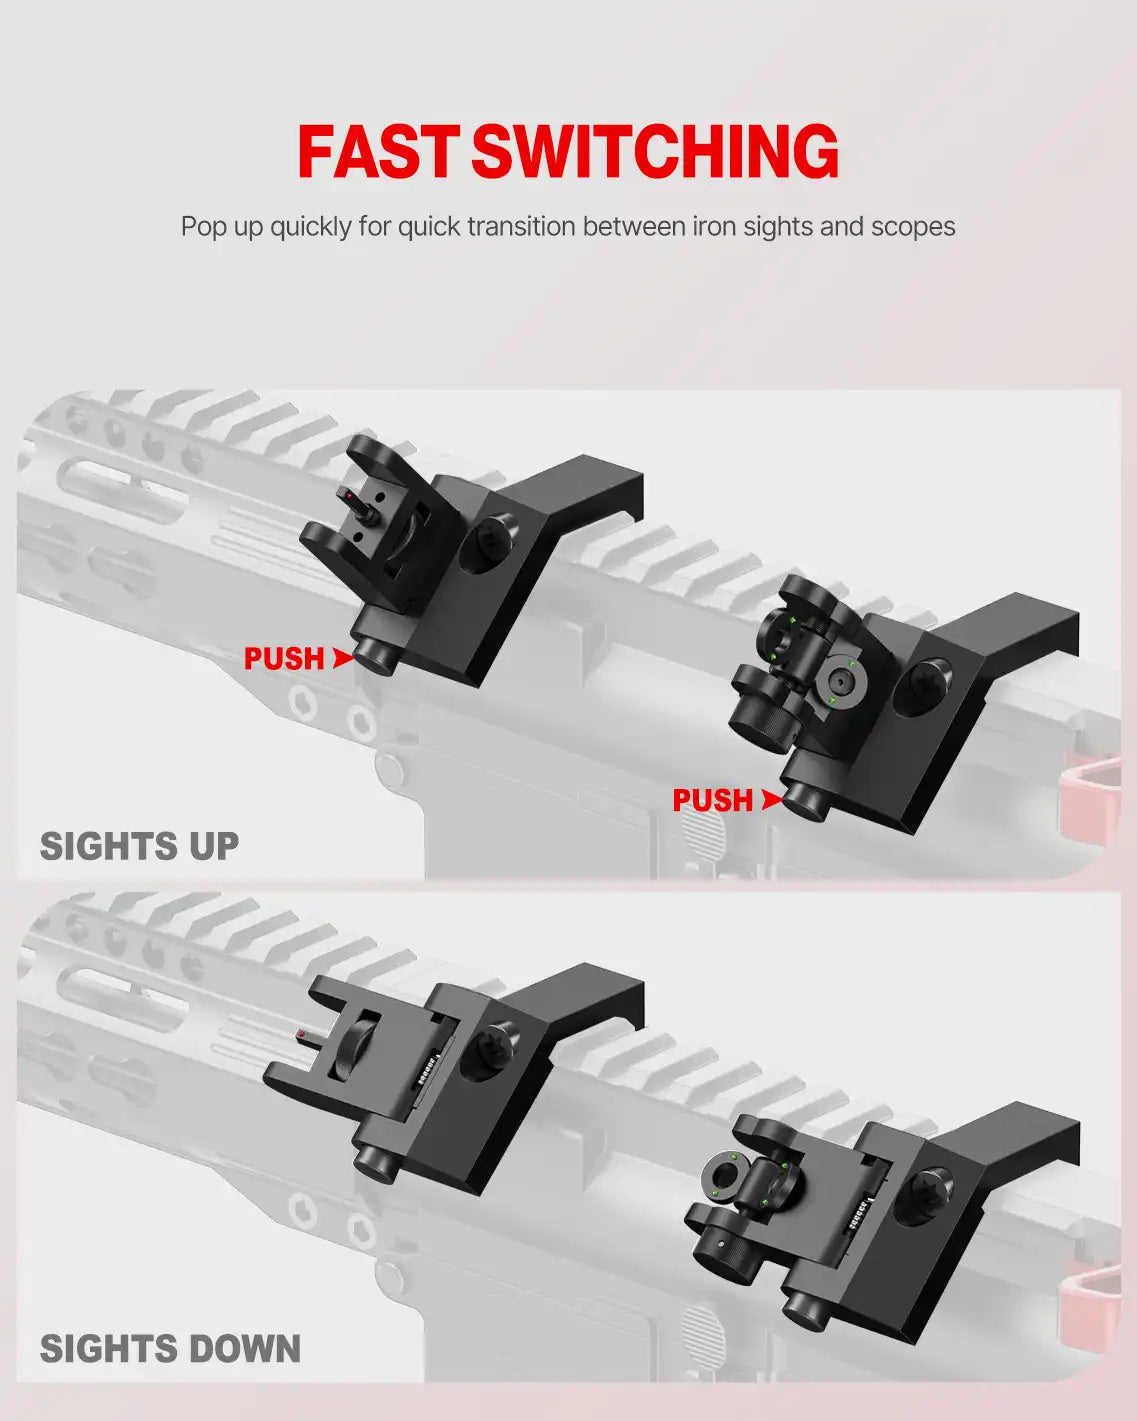 Feyachi S54 Offset Iron Sights - Rapid Transition Backup